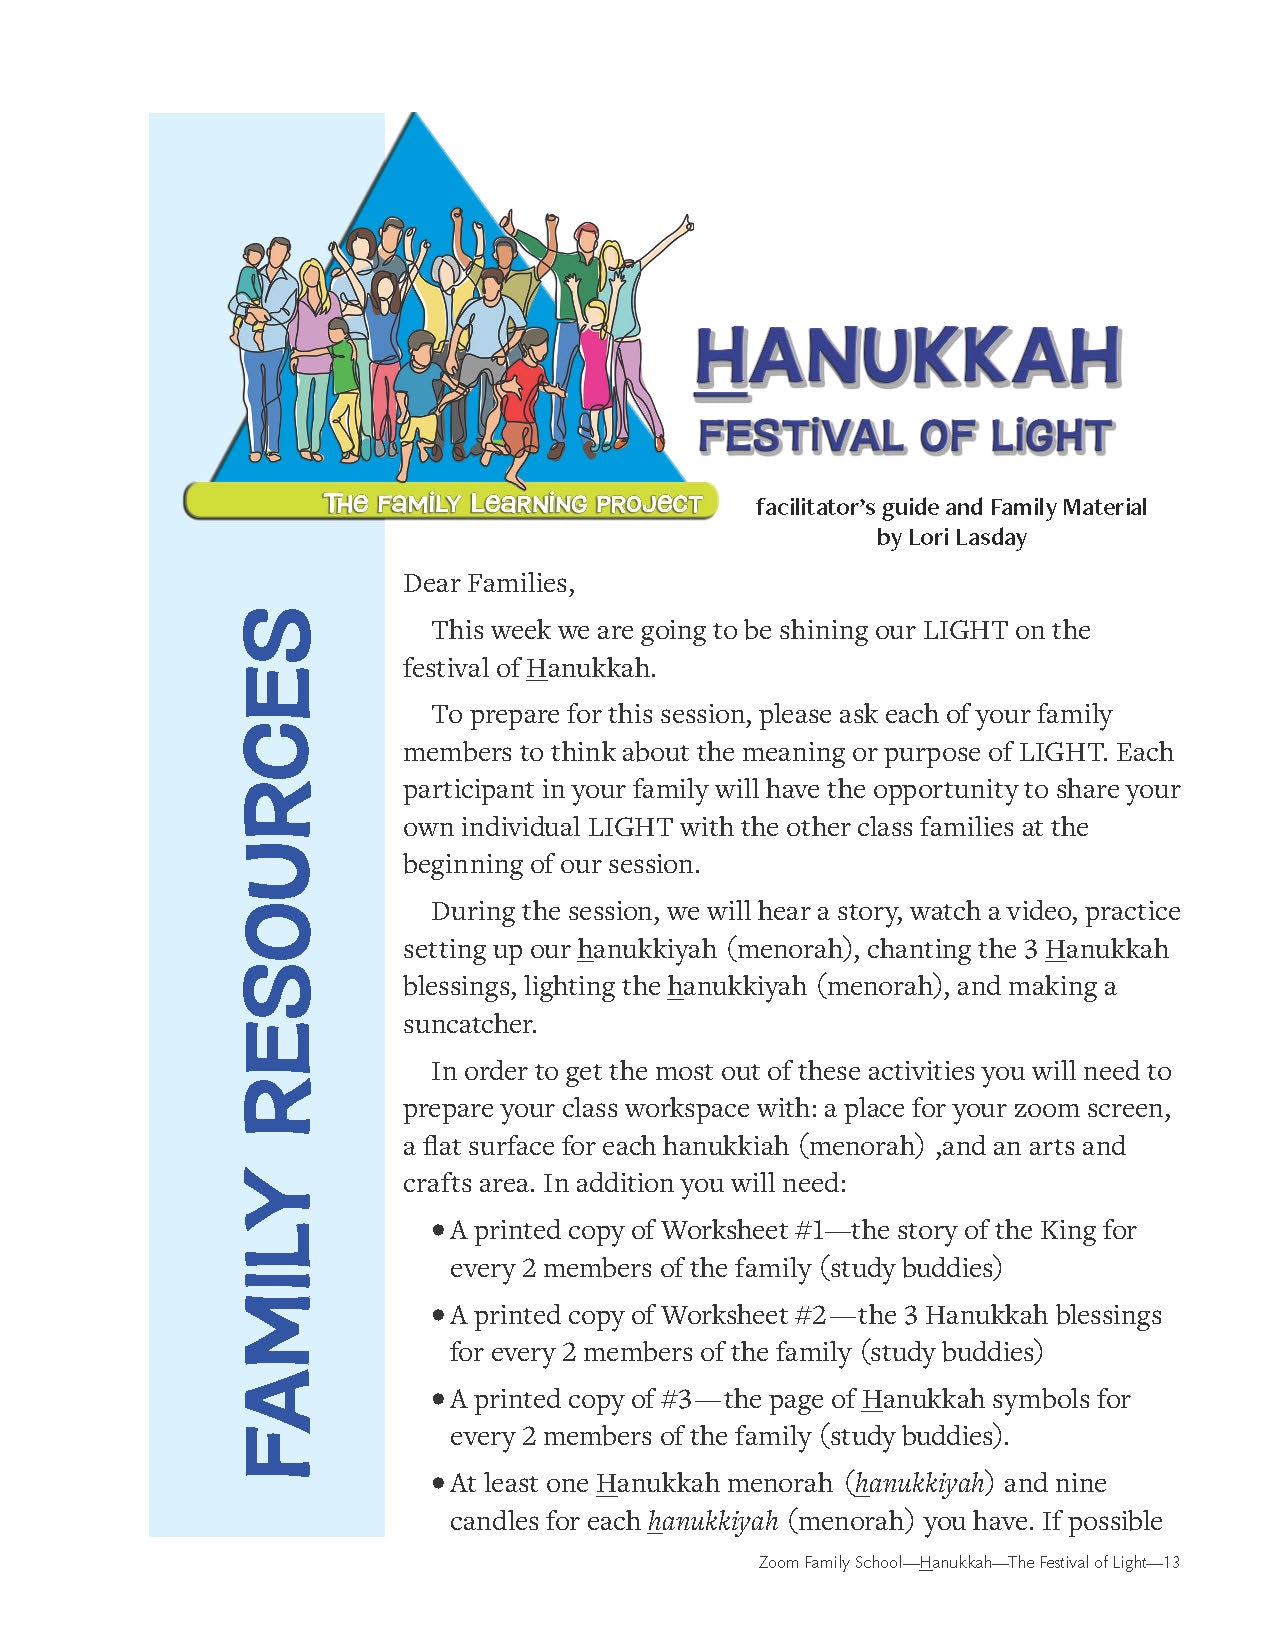 Family Learning Project: Hanukkah—Festival of Light